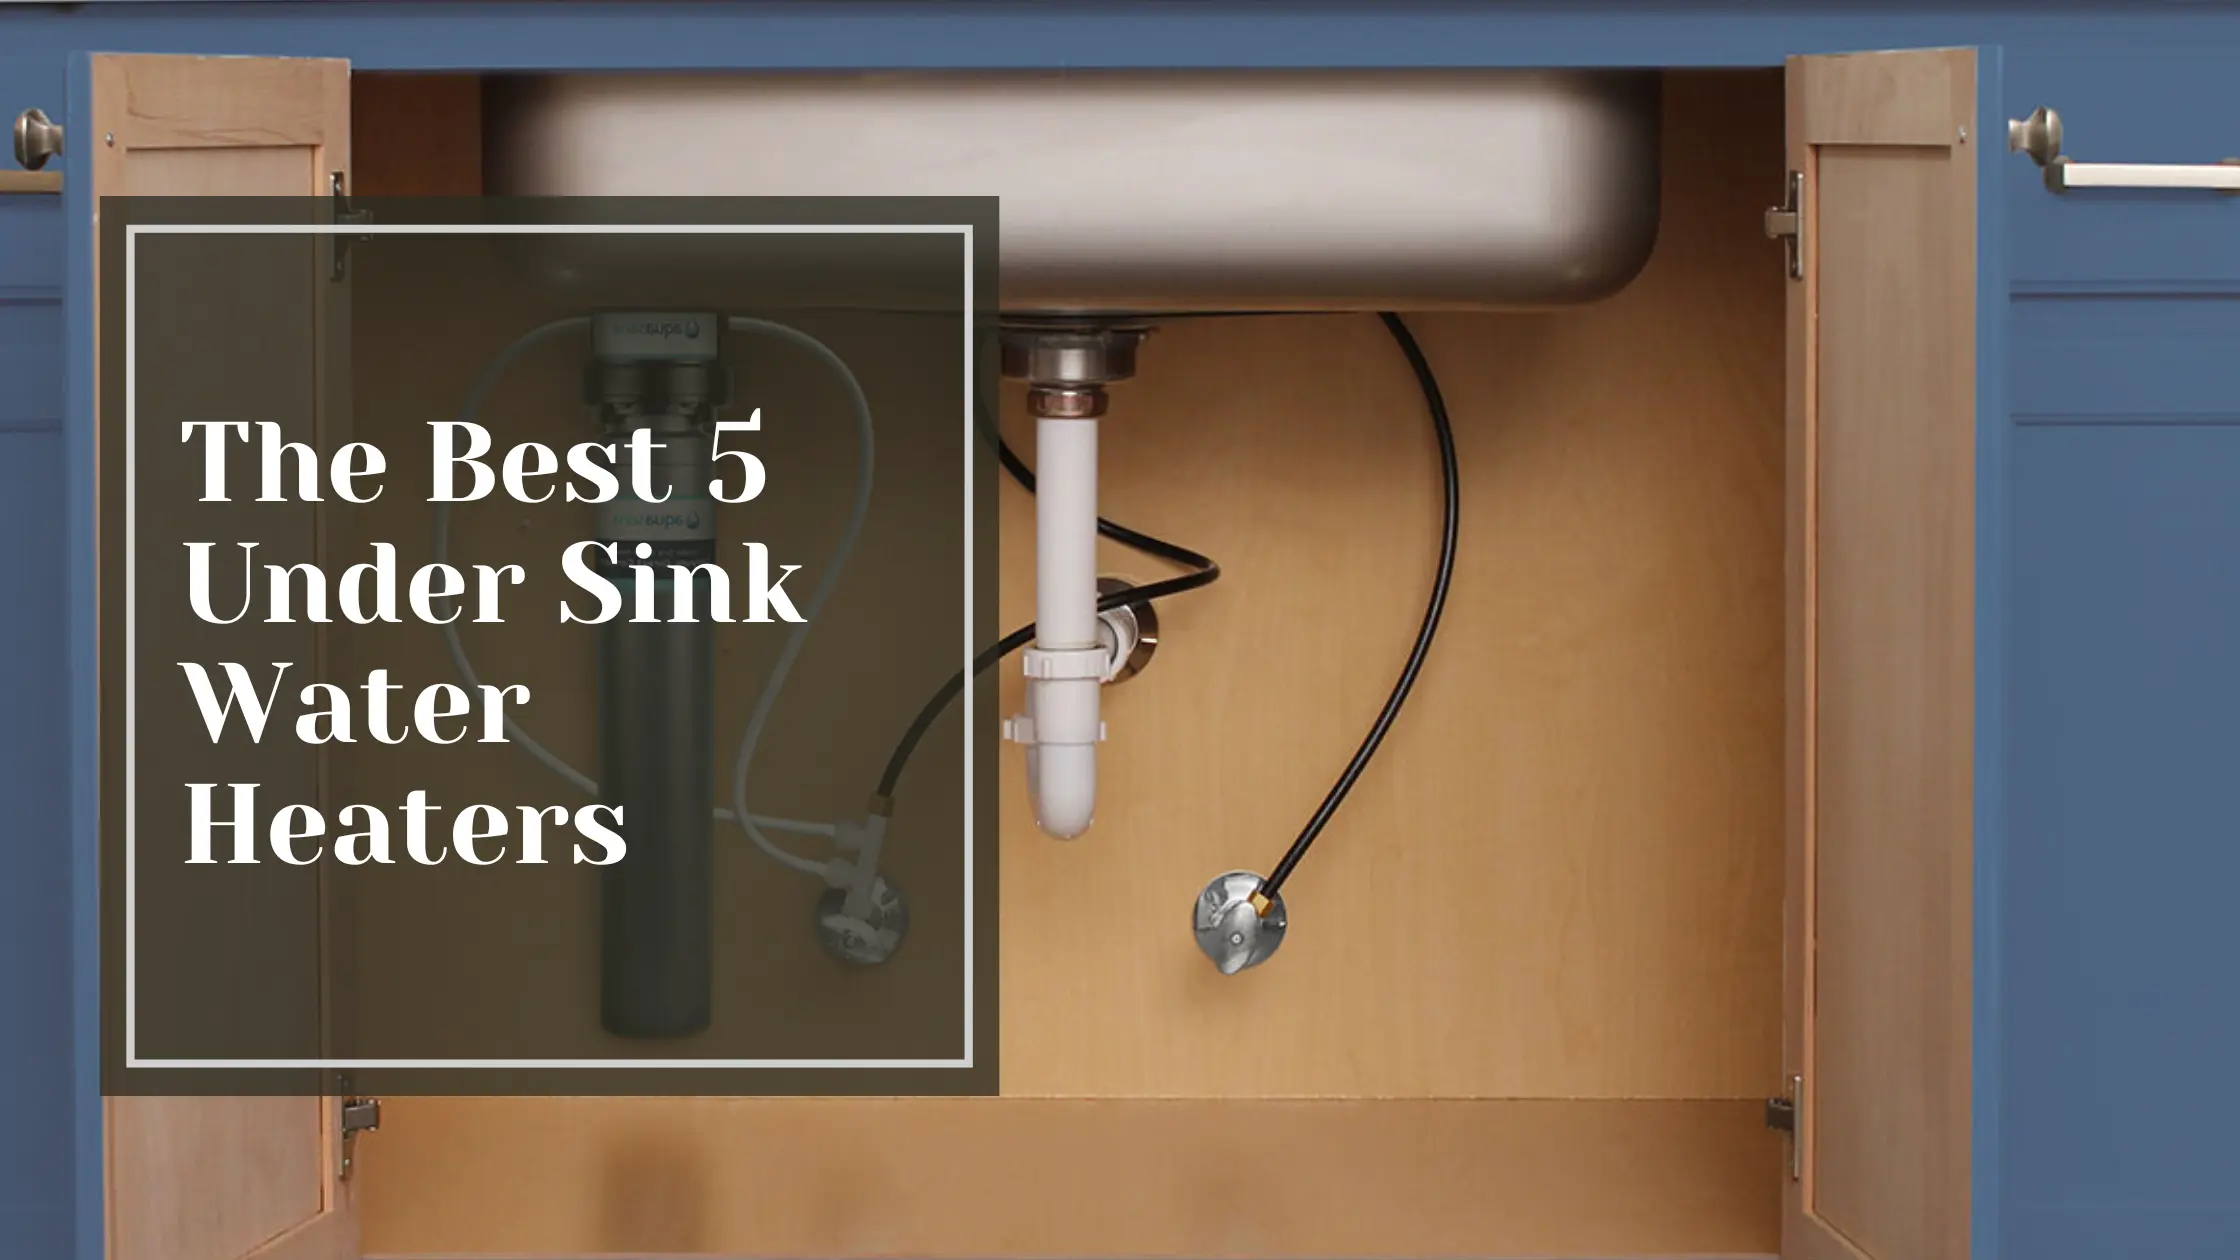 The Best 5 Under Sink Water Heaters